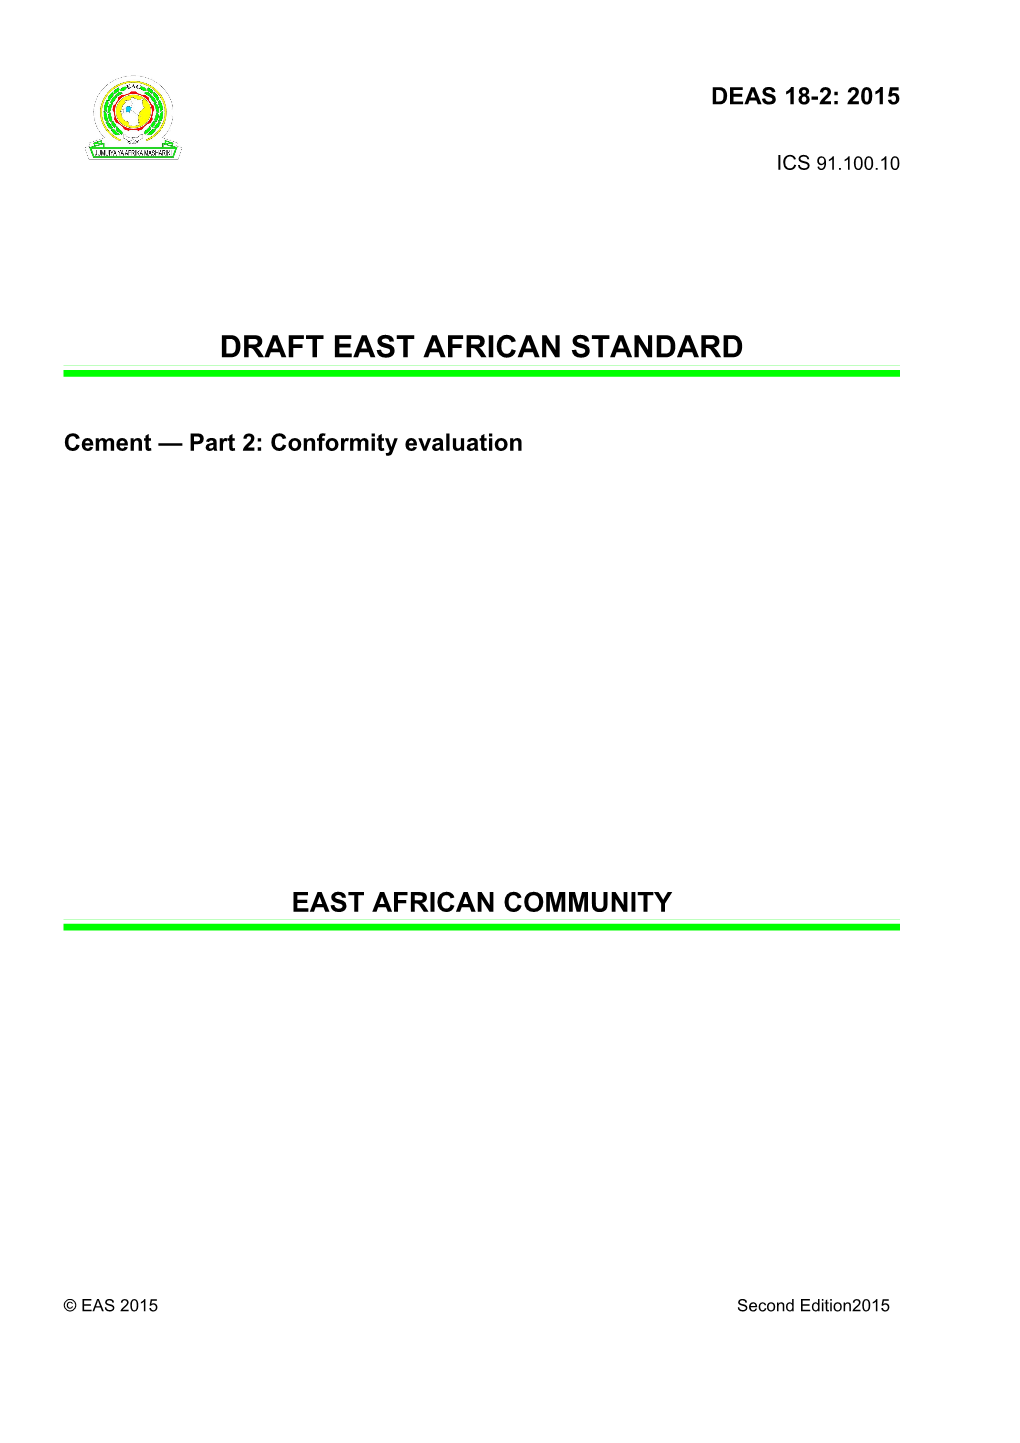 Draft East African Standard